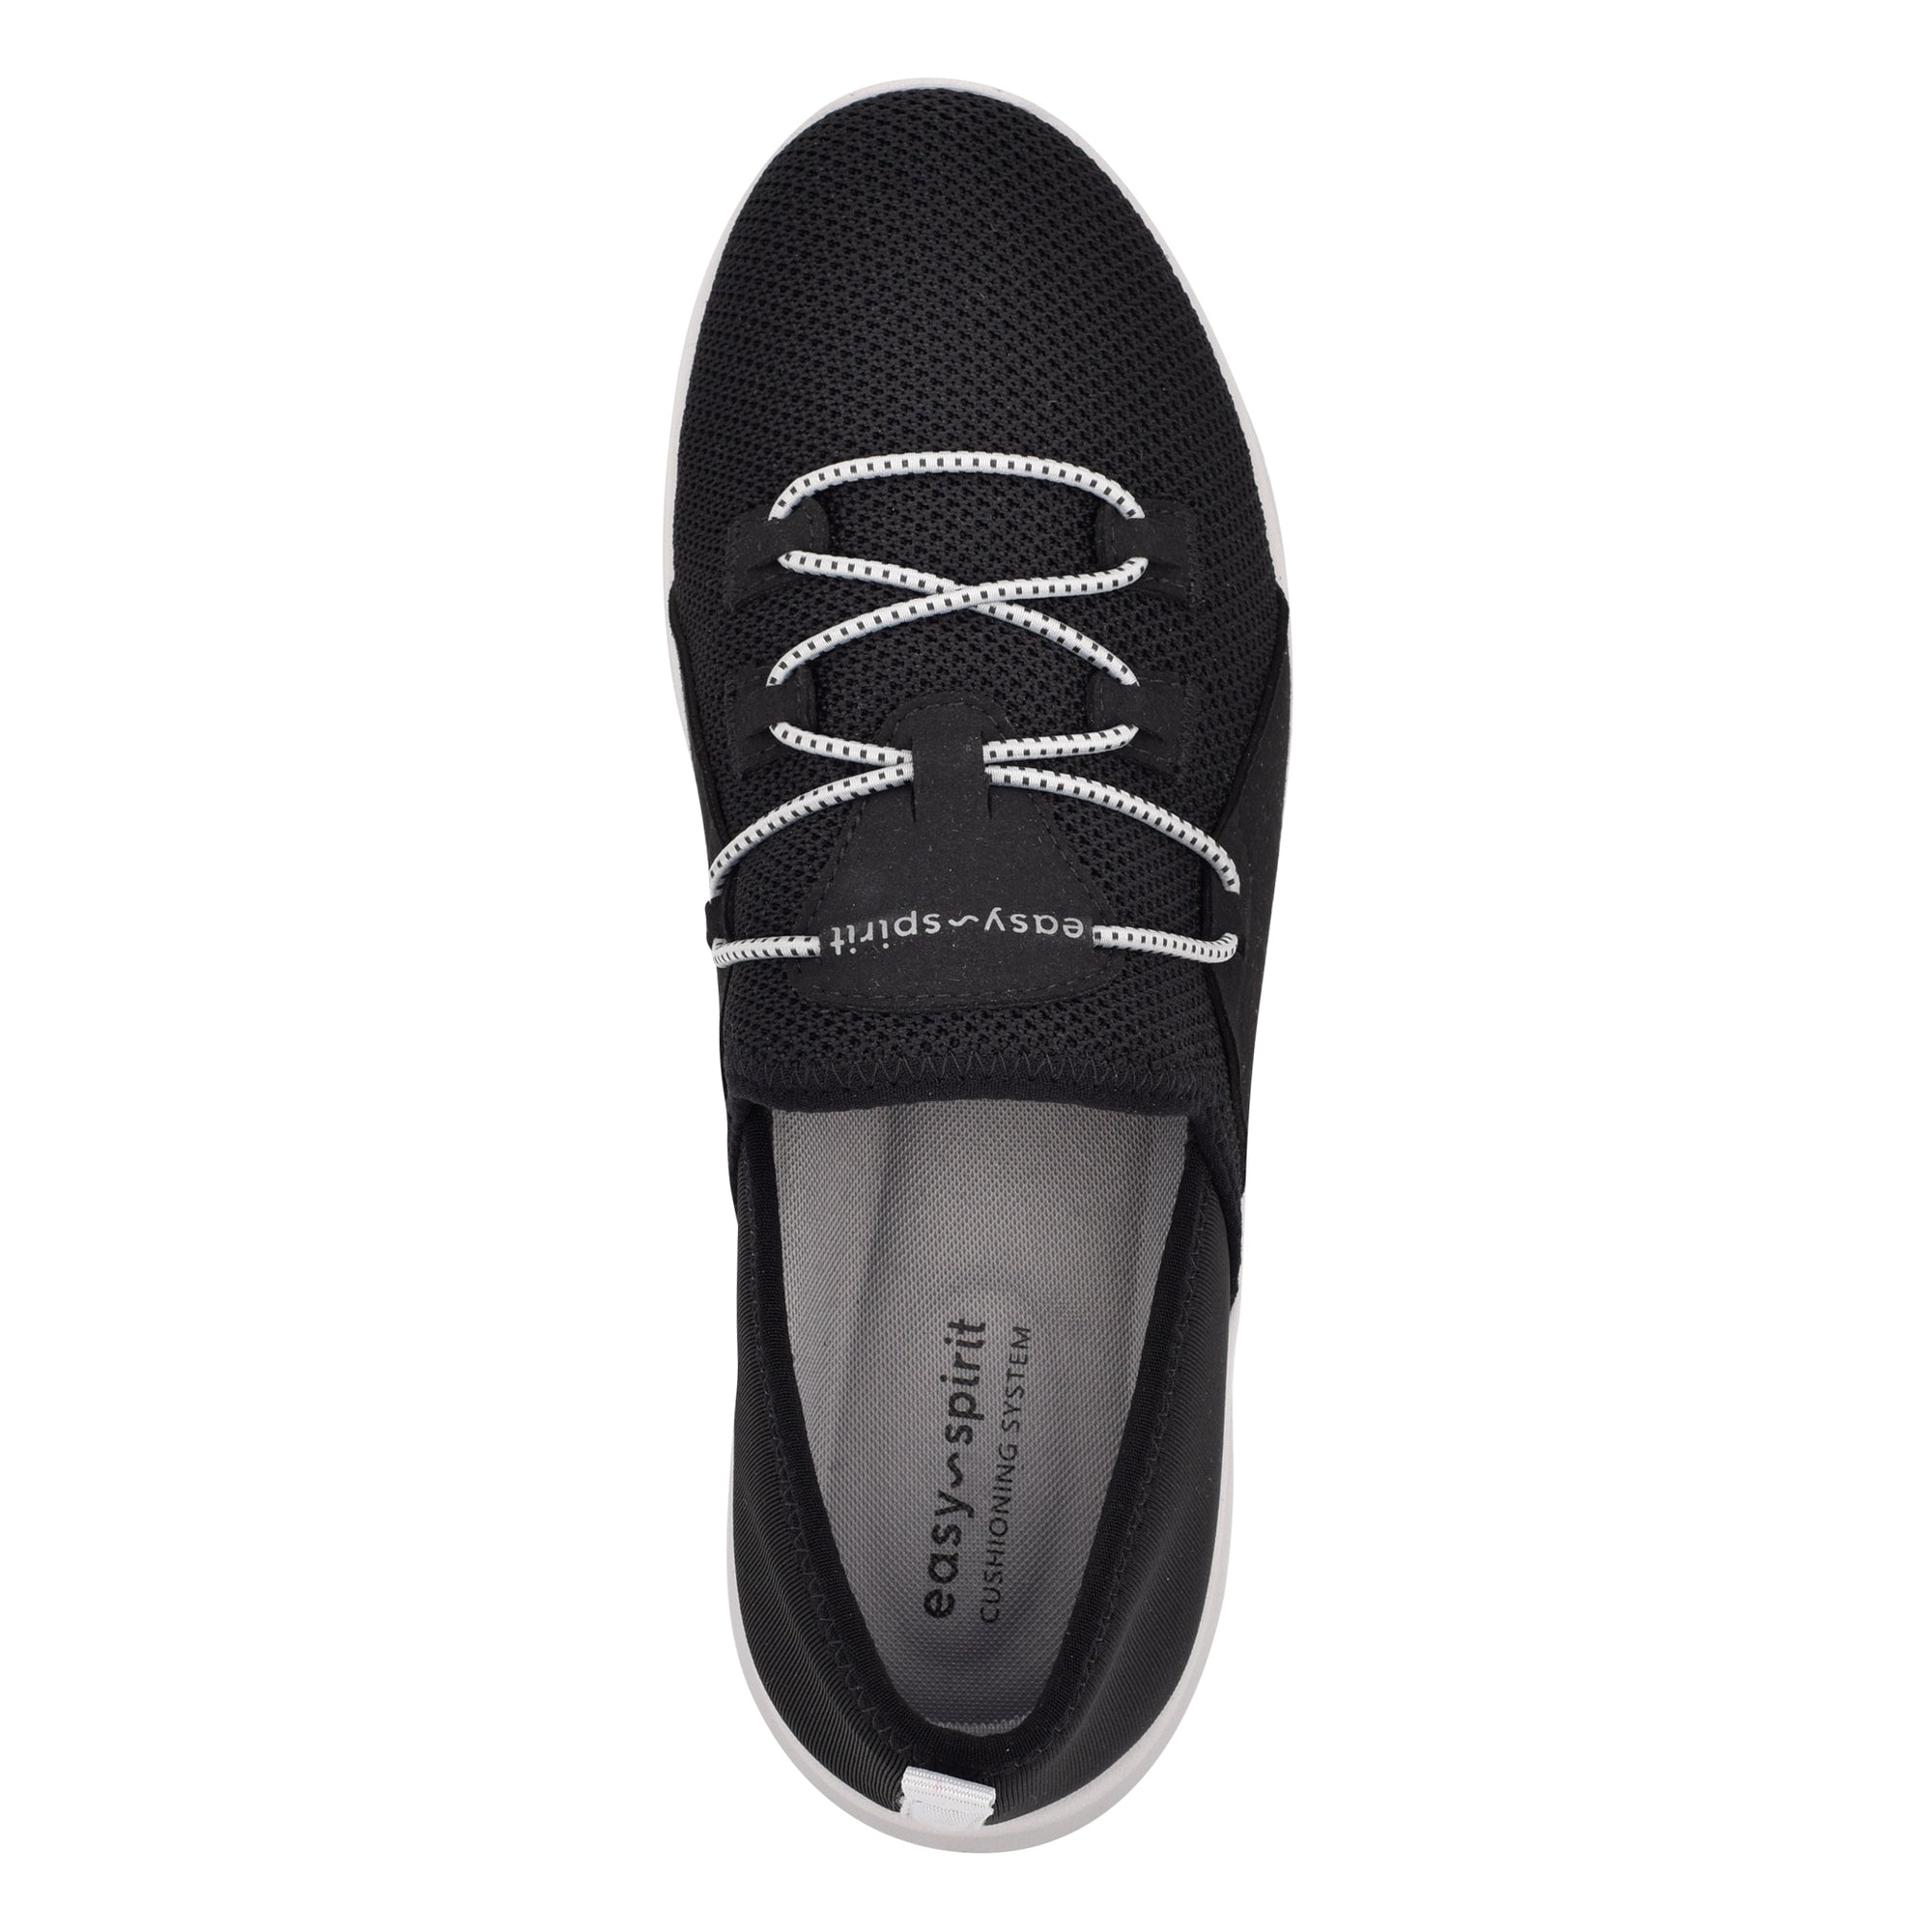 black slip on walking shoes